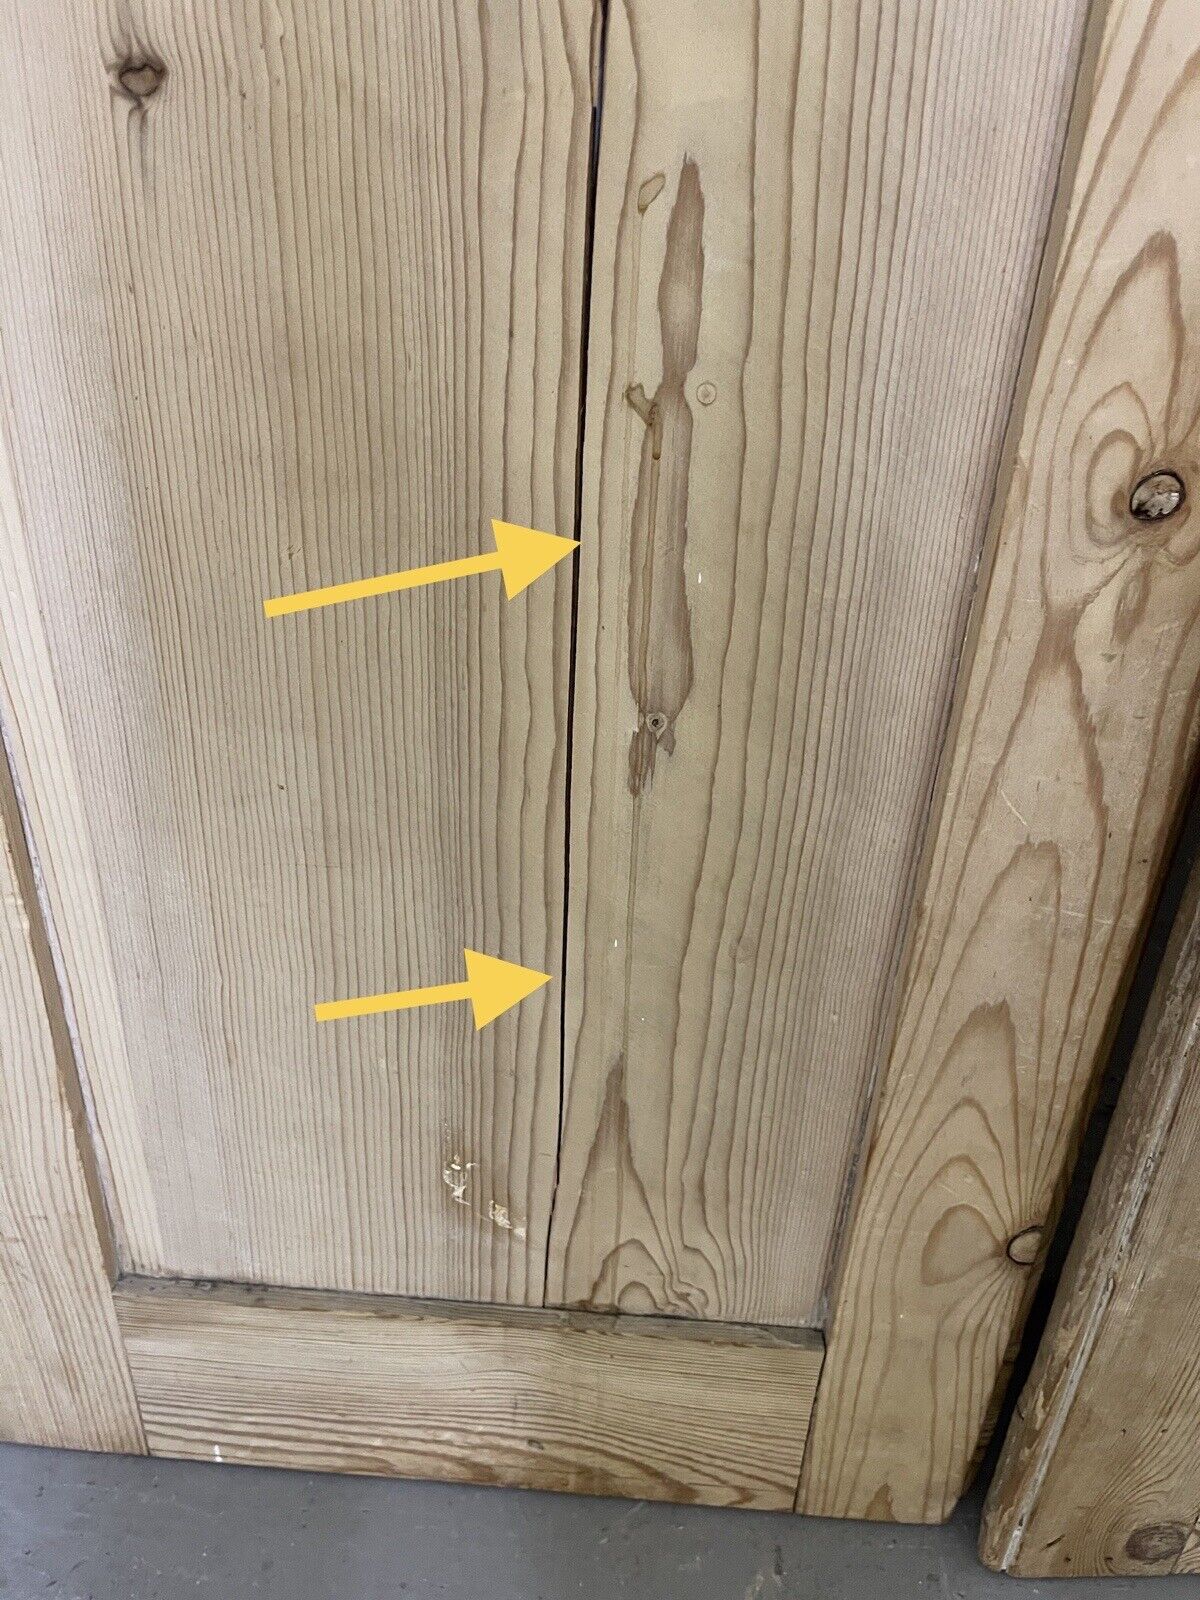 Pair Of Reclaimed Interlocking Victorian Pine  Alcove Cupboard Doors 1605 x 887